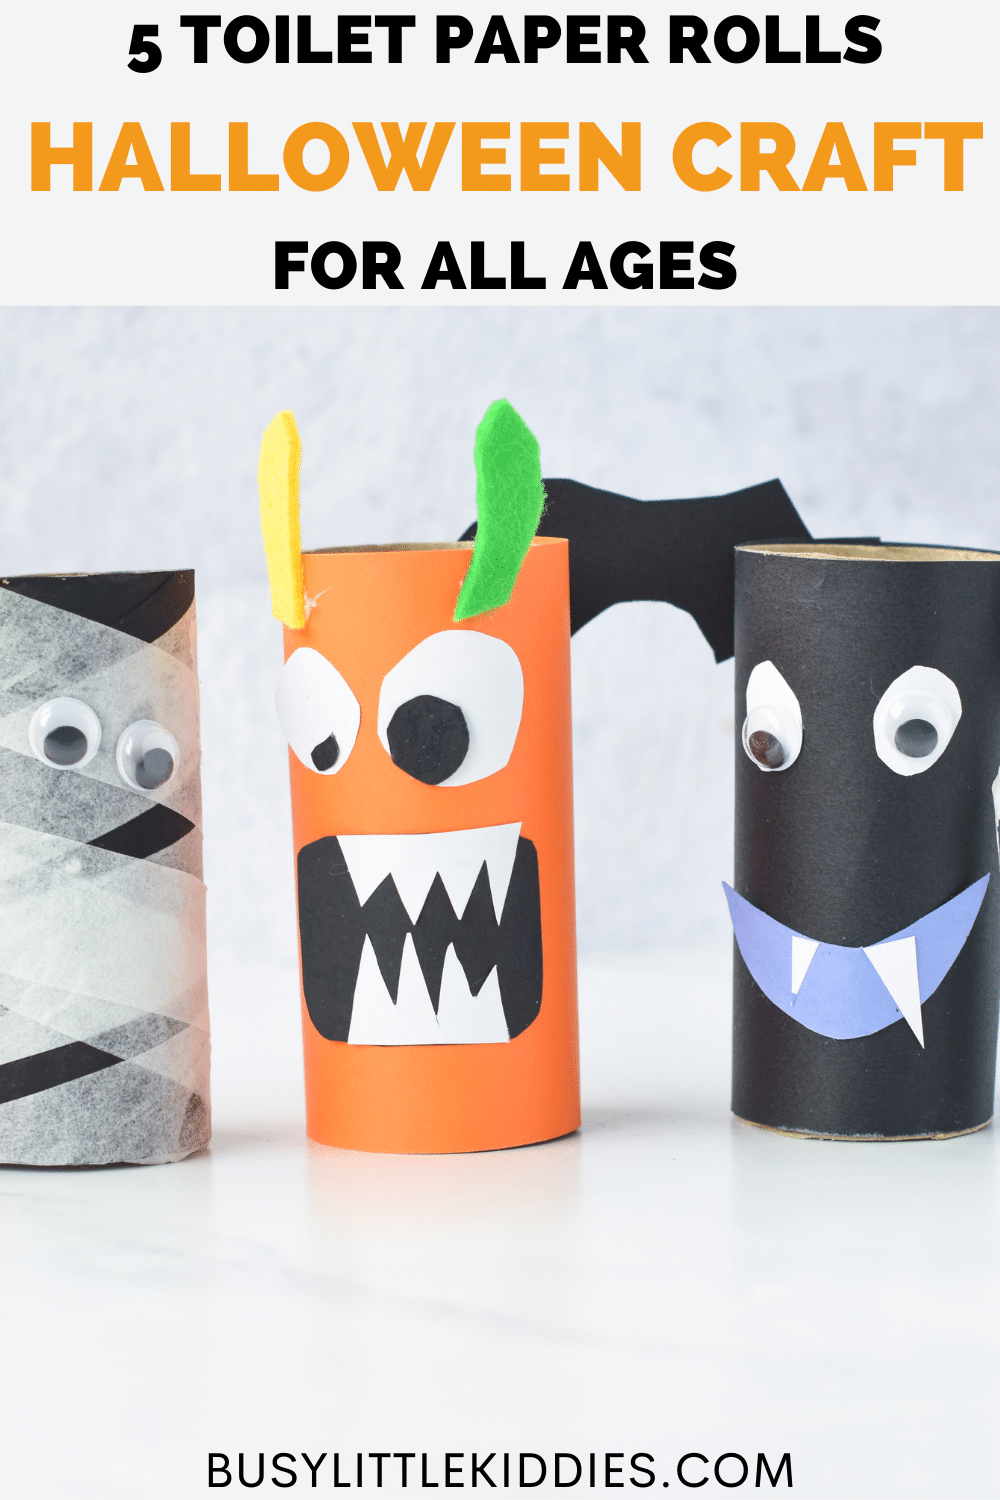 5 Toilet Paper Roll Halloween Craft Ideas - Busy Little Kiddies